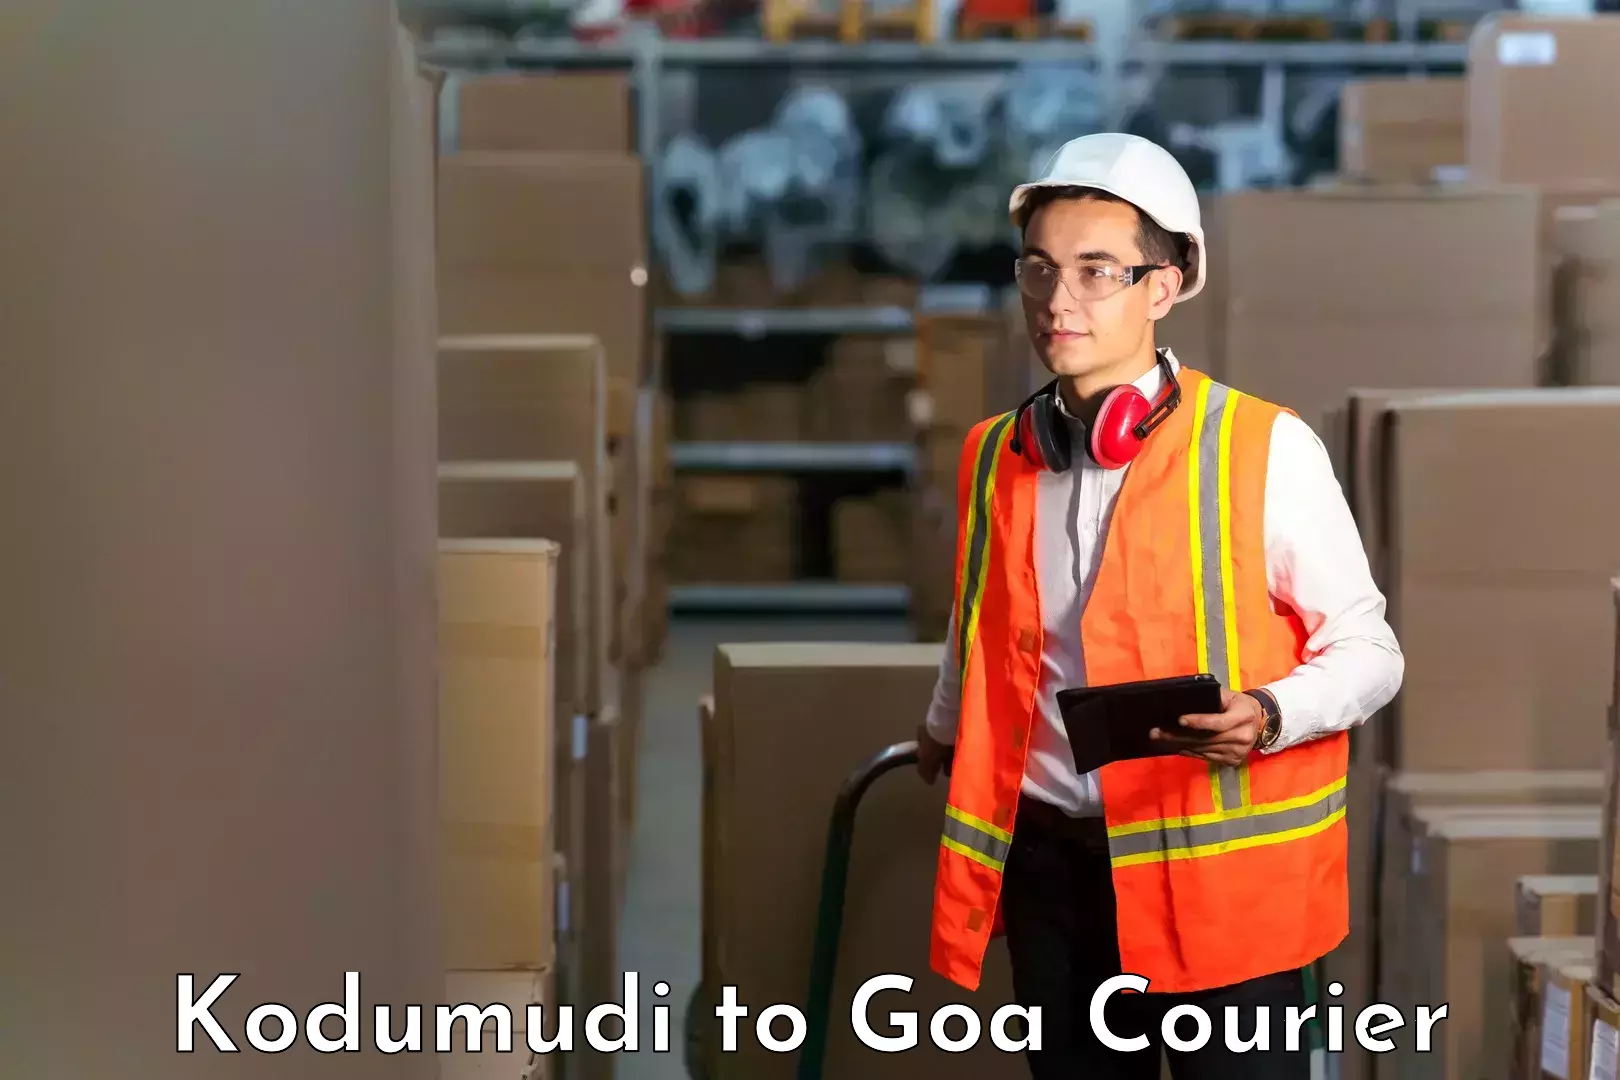 Courier service efficiency Kodumudi to Panaji